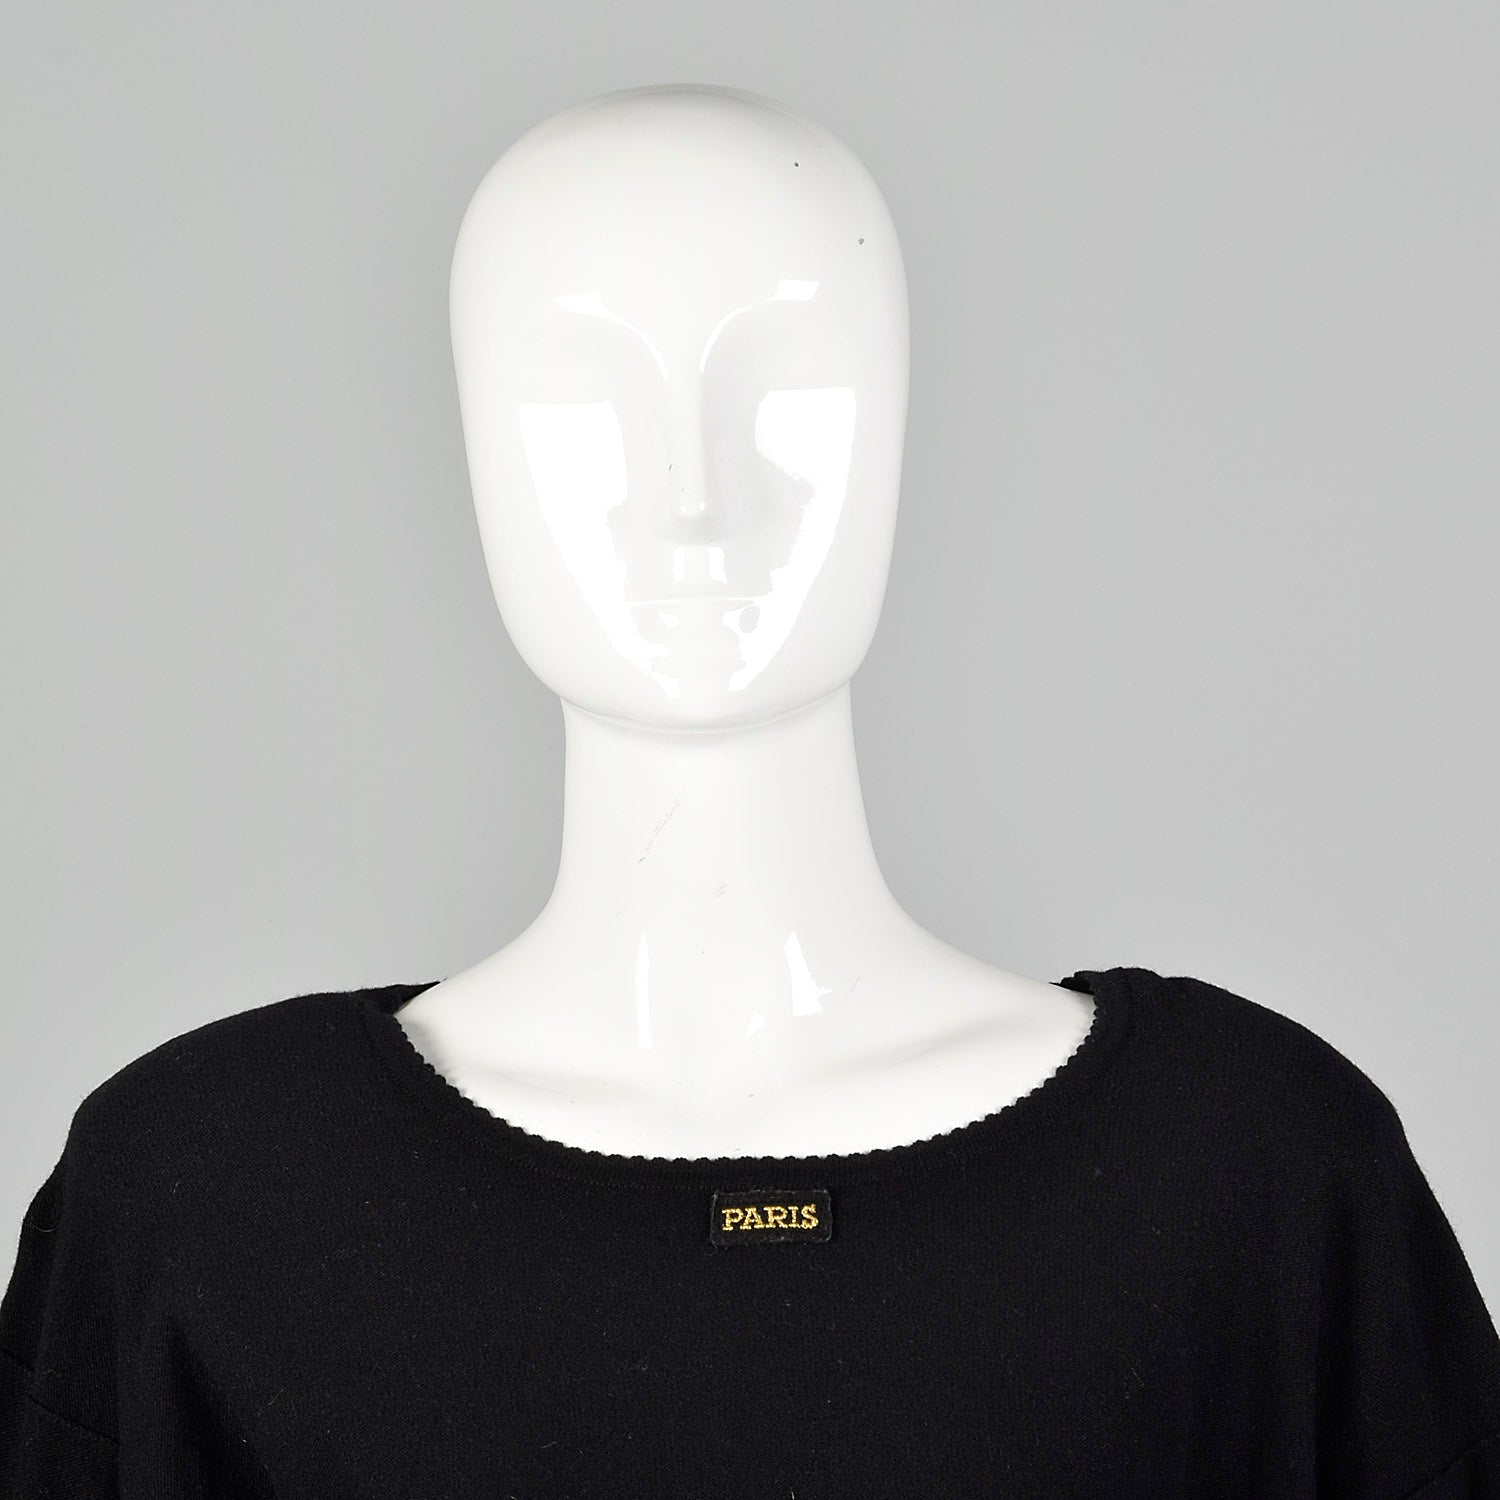 Large Sonia Rykiel 1980s Classic Black Sweater